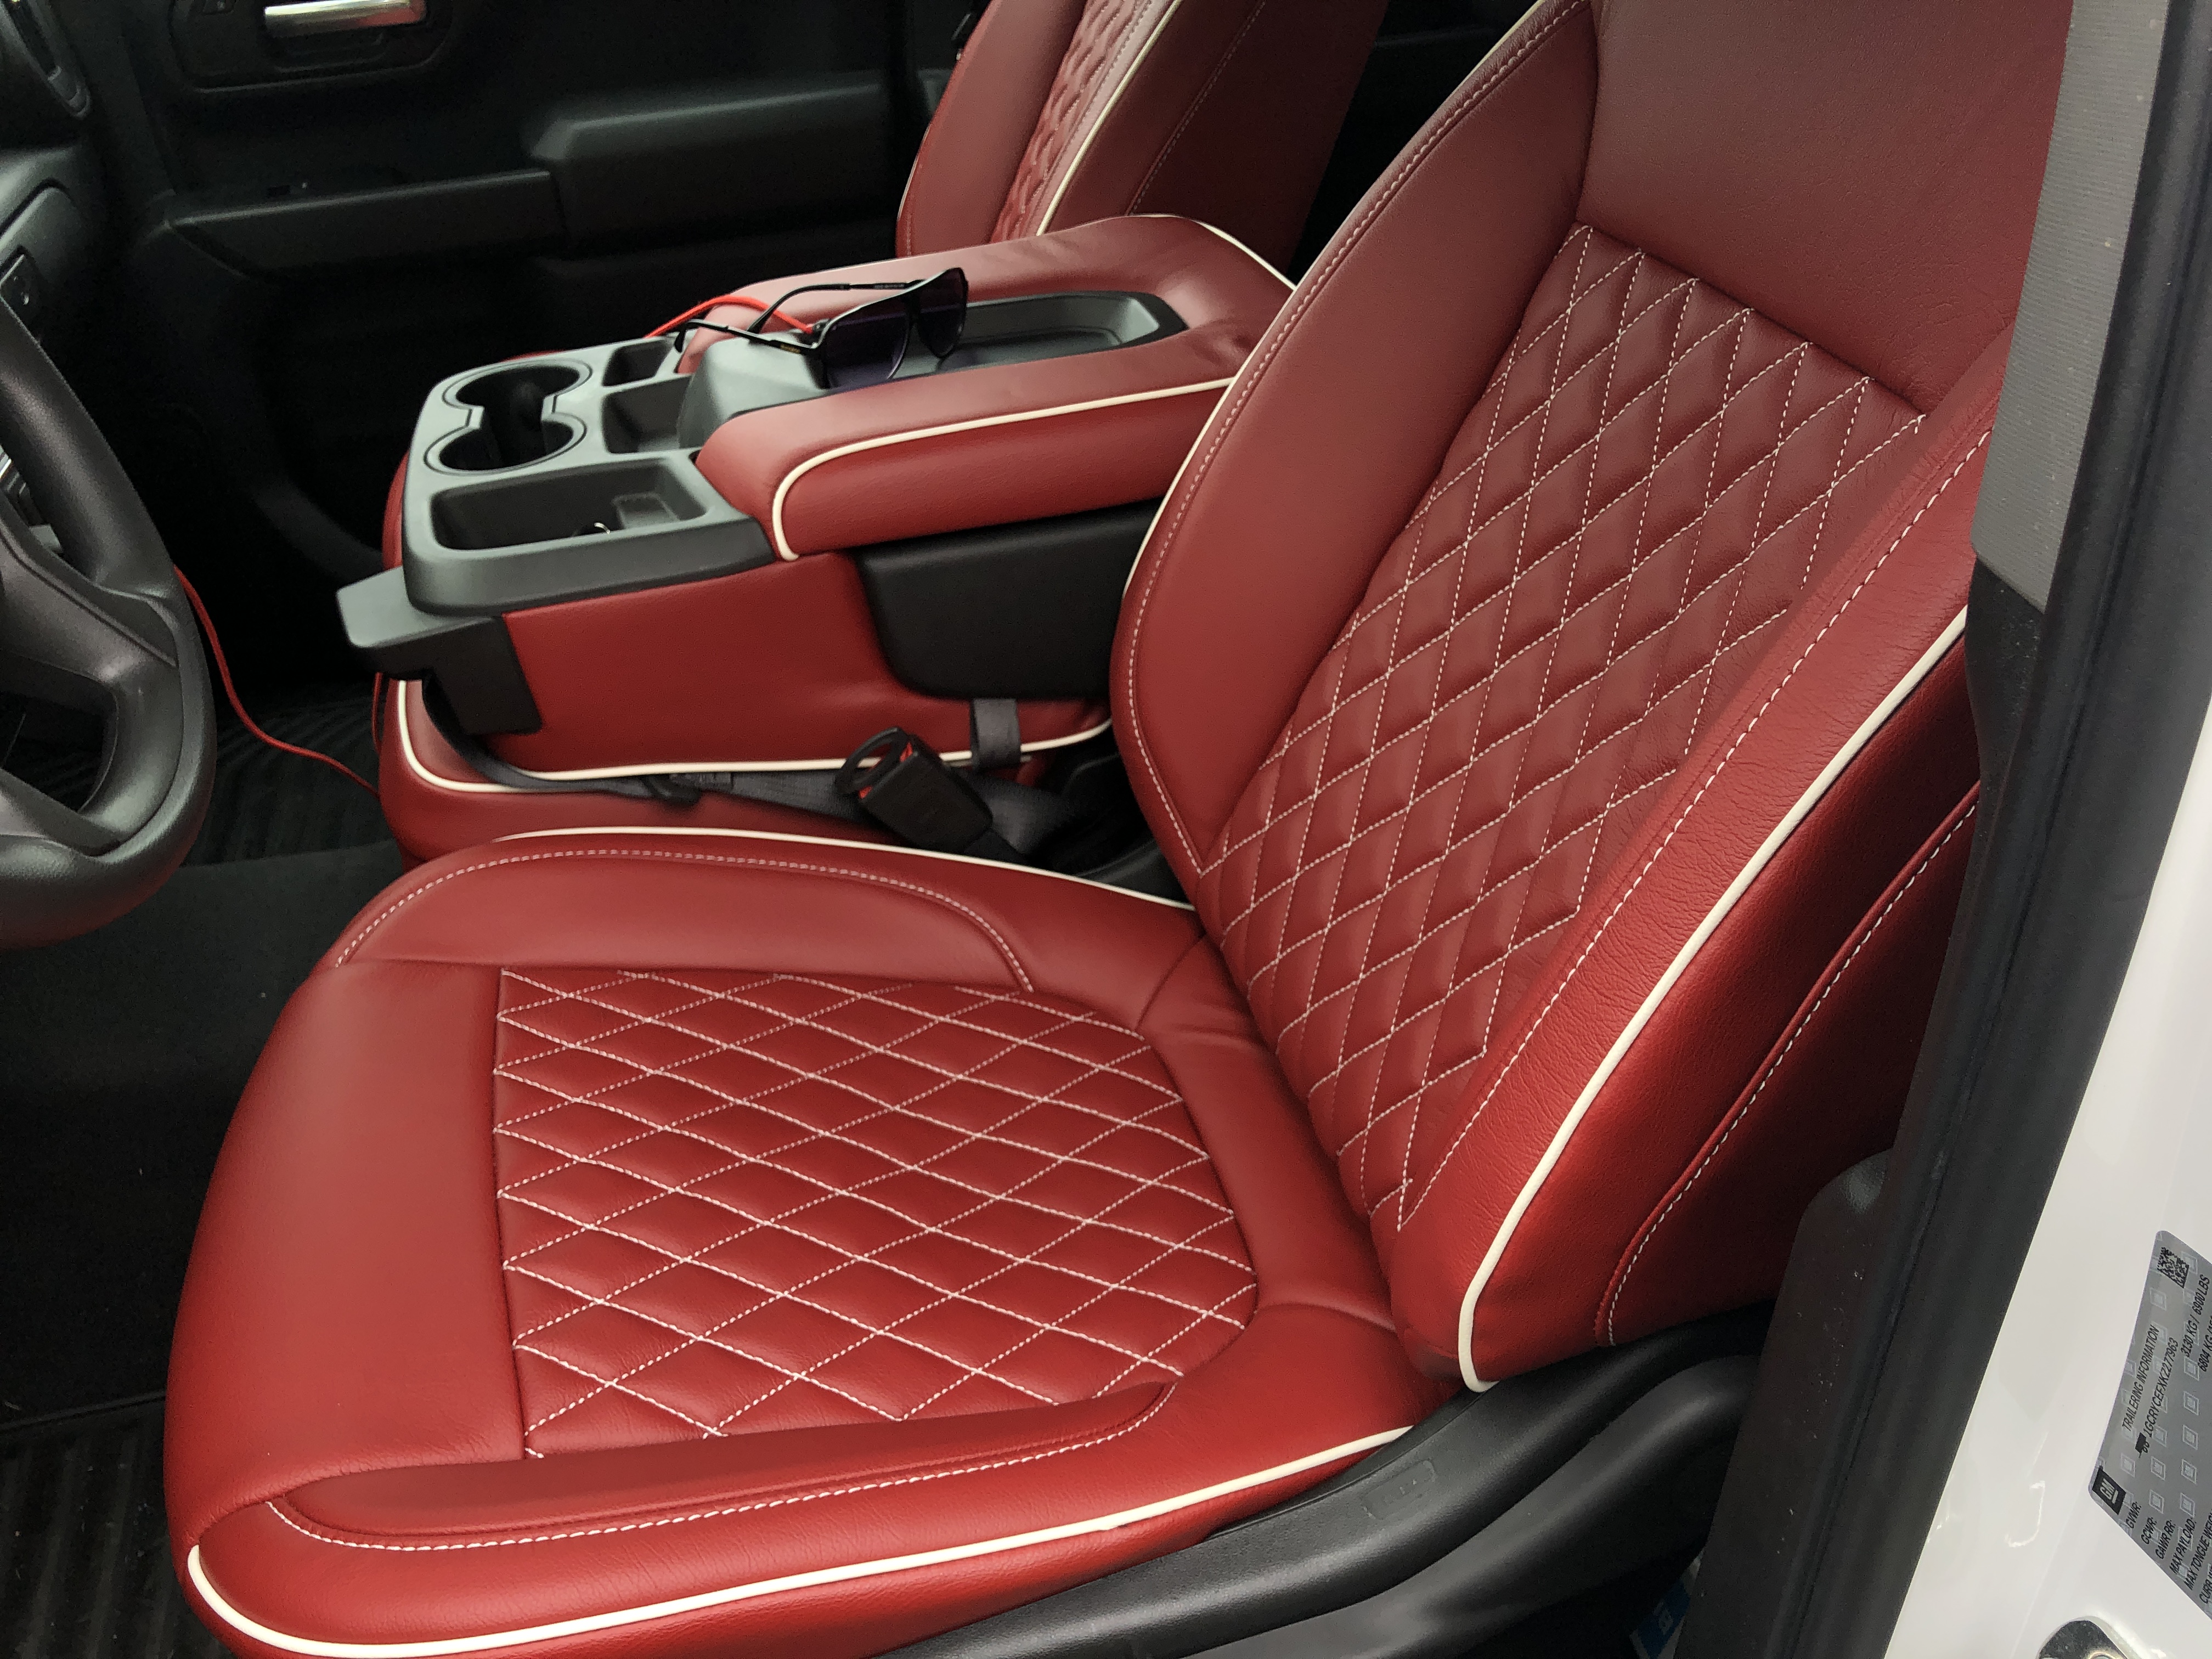 2019 Chevy Trail Boss V8, Custom Red Leather Interior. - 6SpeedOnline